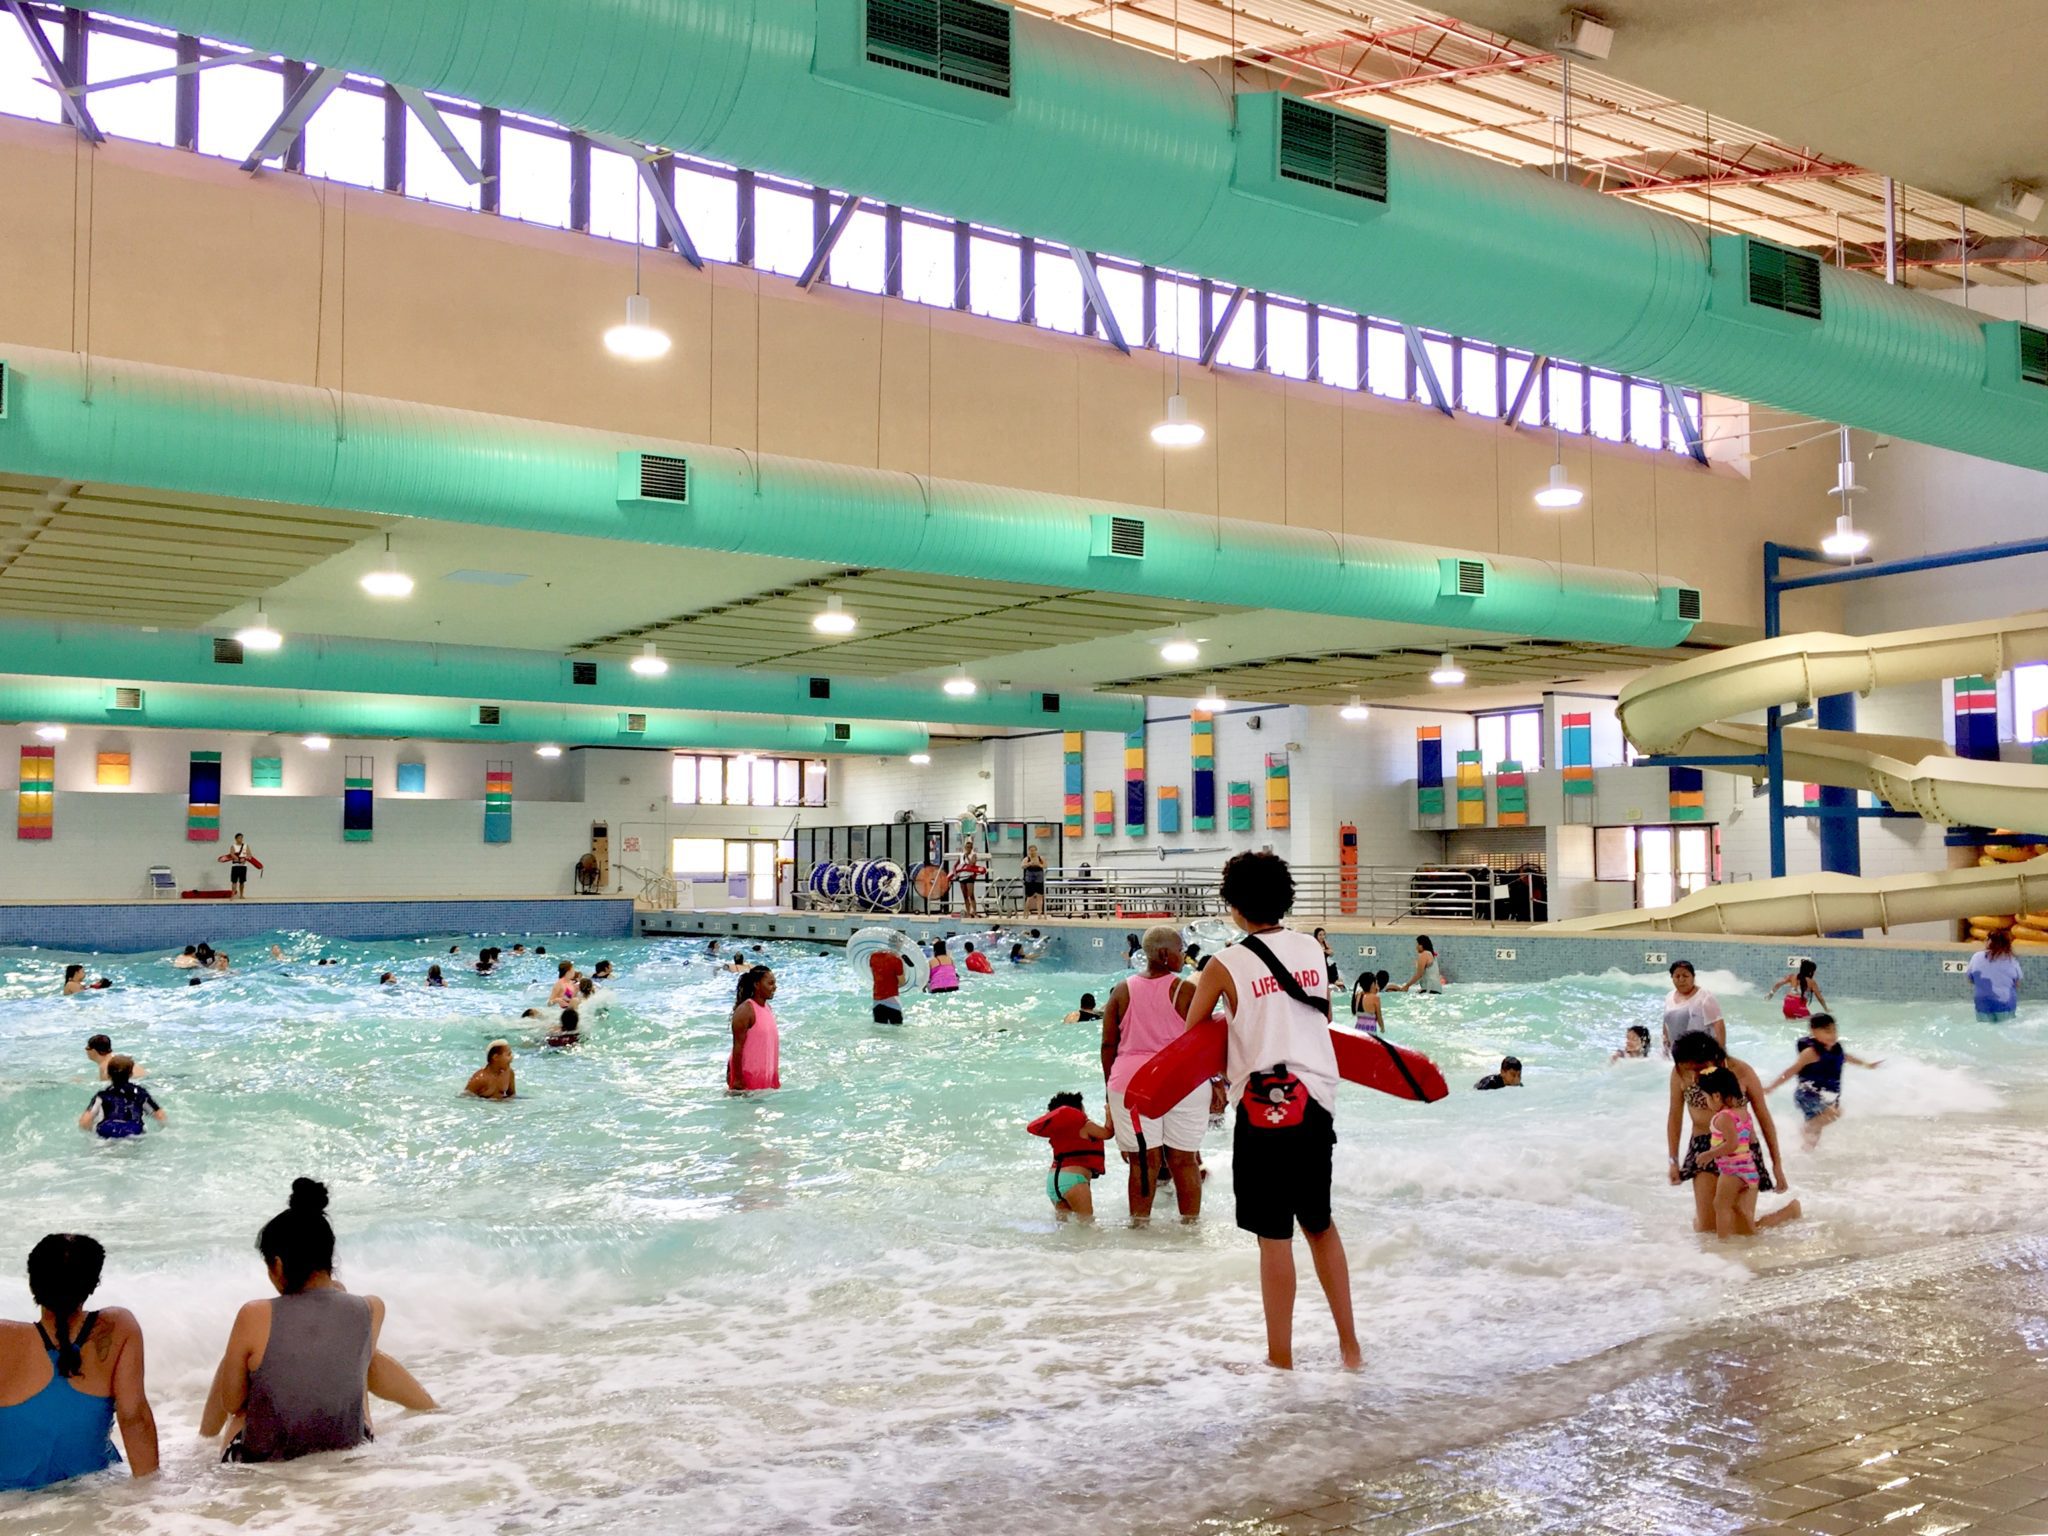 Best pools and splash pads in Phoenix and the East Valley- 101 activities for Phoenix Kids #phoenix #arizona #kiwanispark